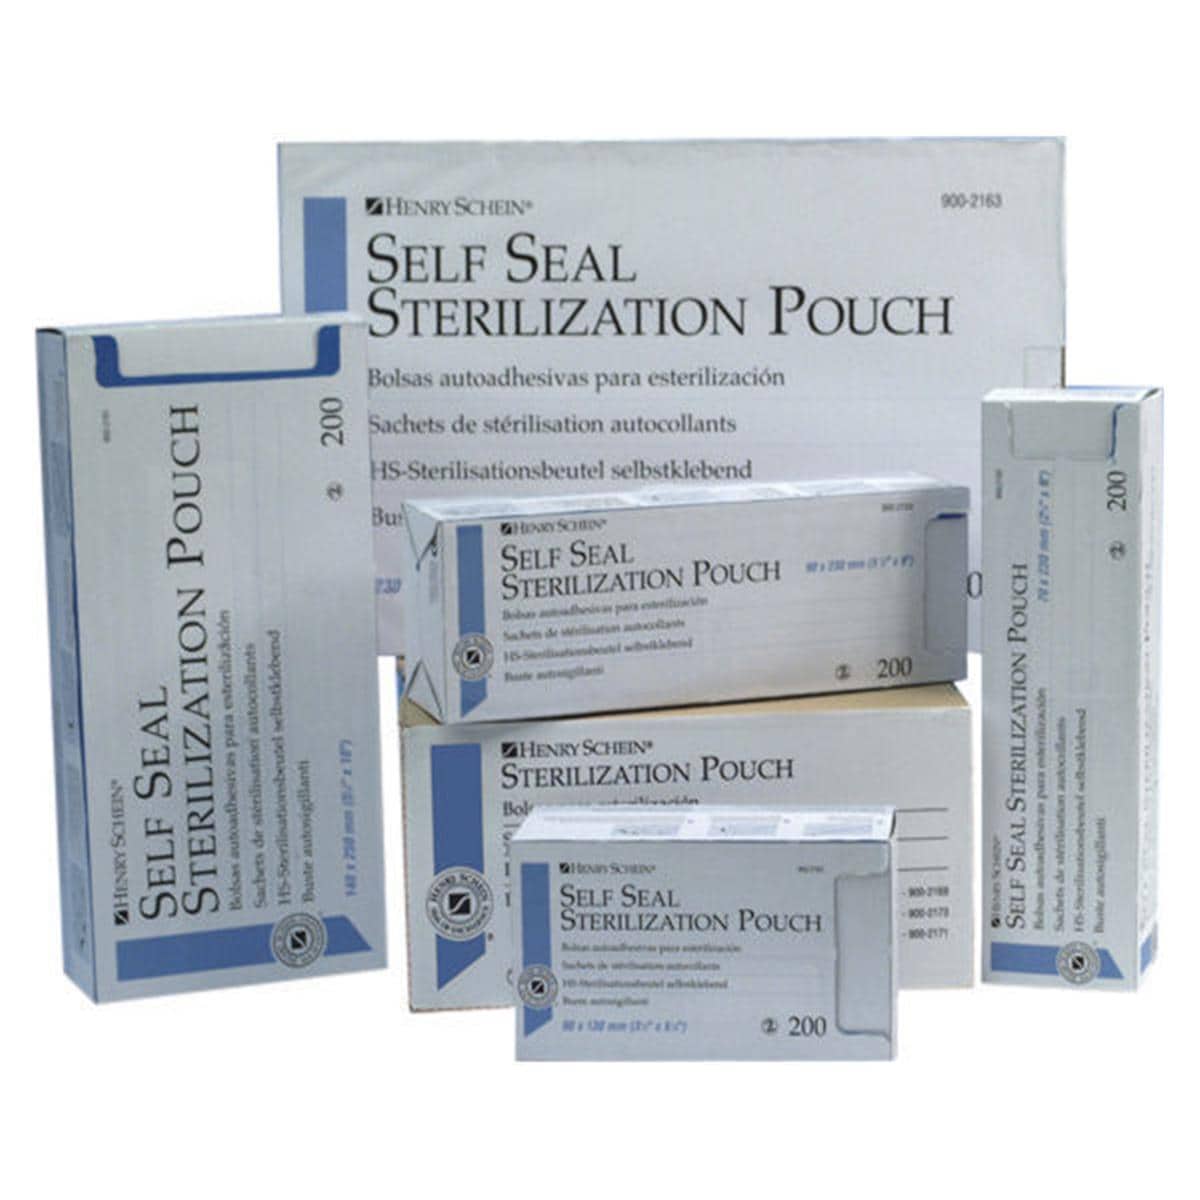 HS-Sterilisationsbeutel selbstklebend, Self seal Sterilisation Pouch - Größe 89 x 254 mm, Packung 200 Stück